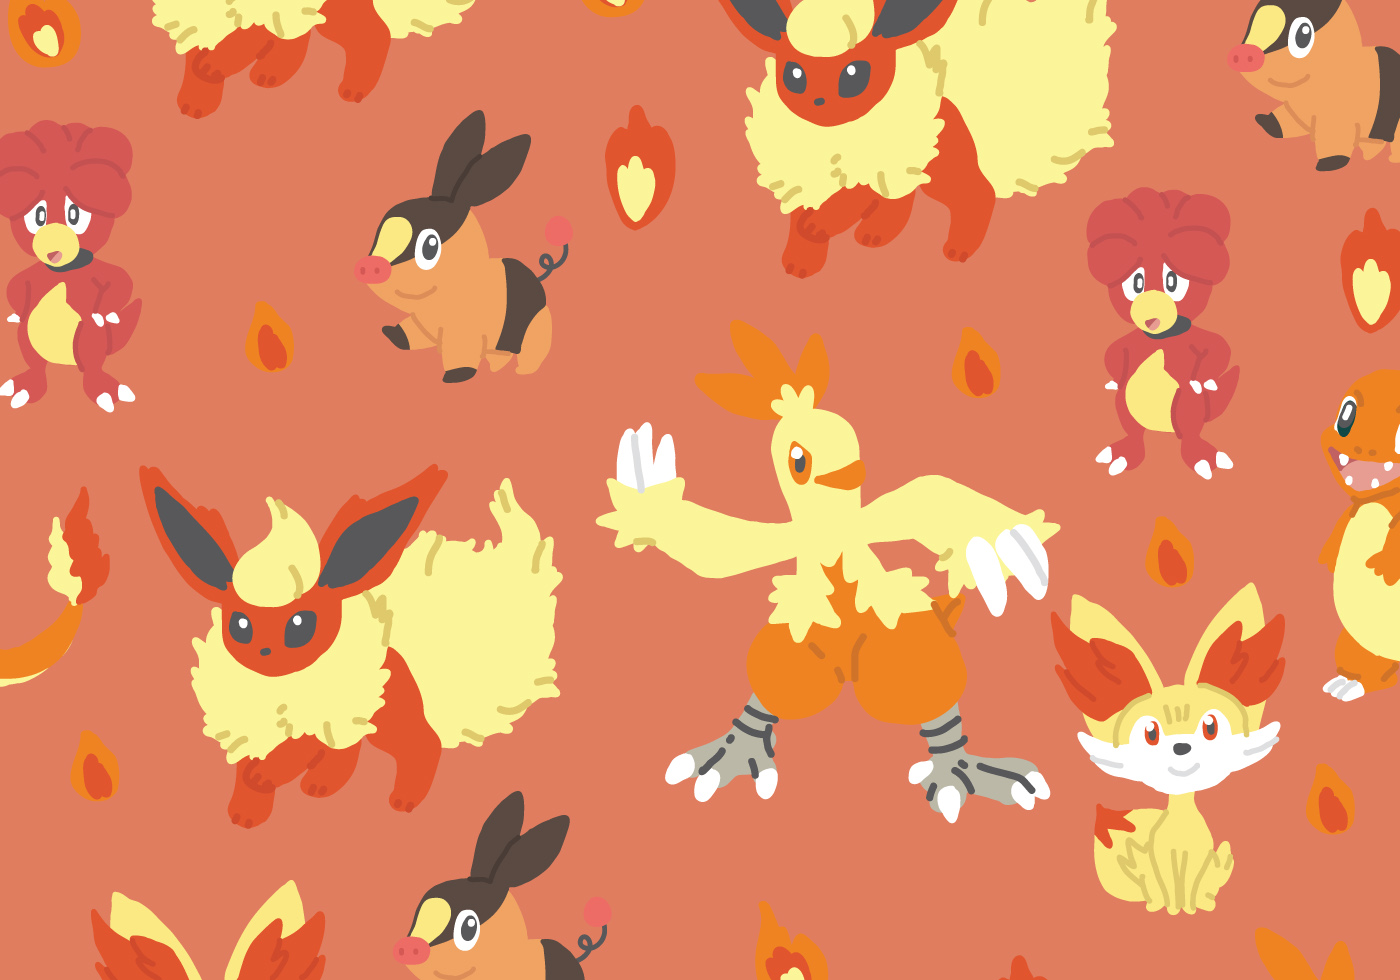 Fire Type Pokemon Pattern Download Free Vectors Clipart Graphics Vector Art